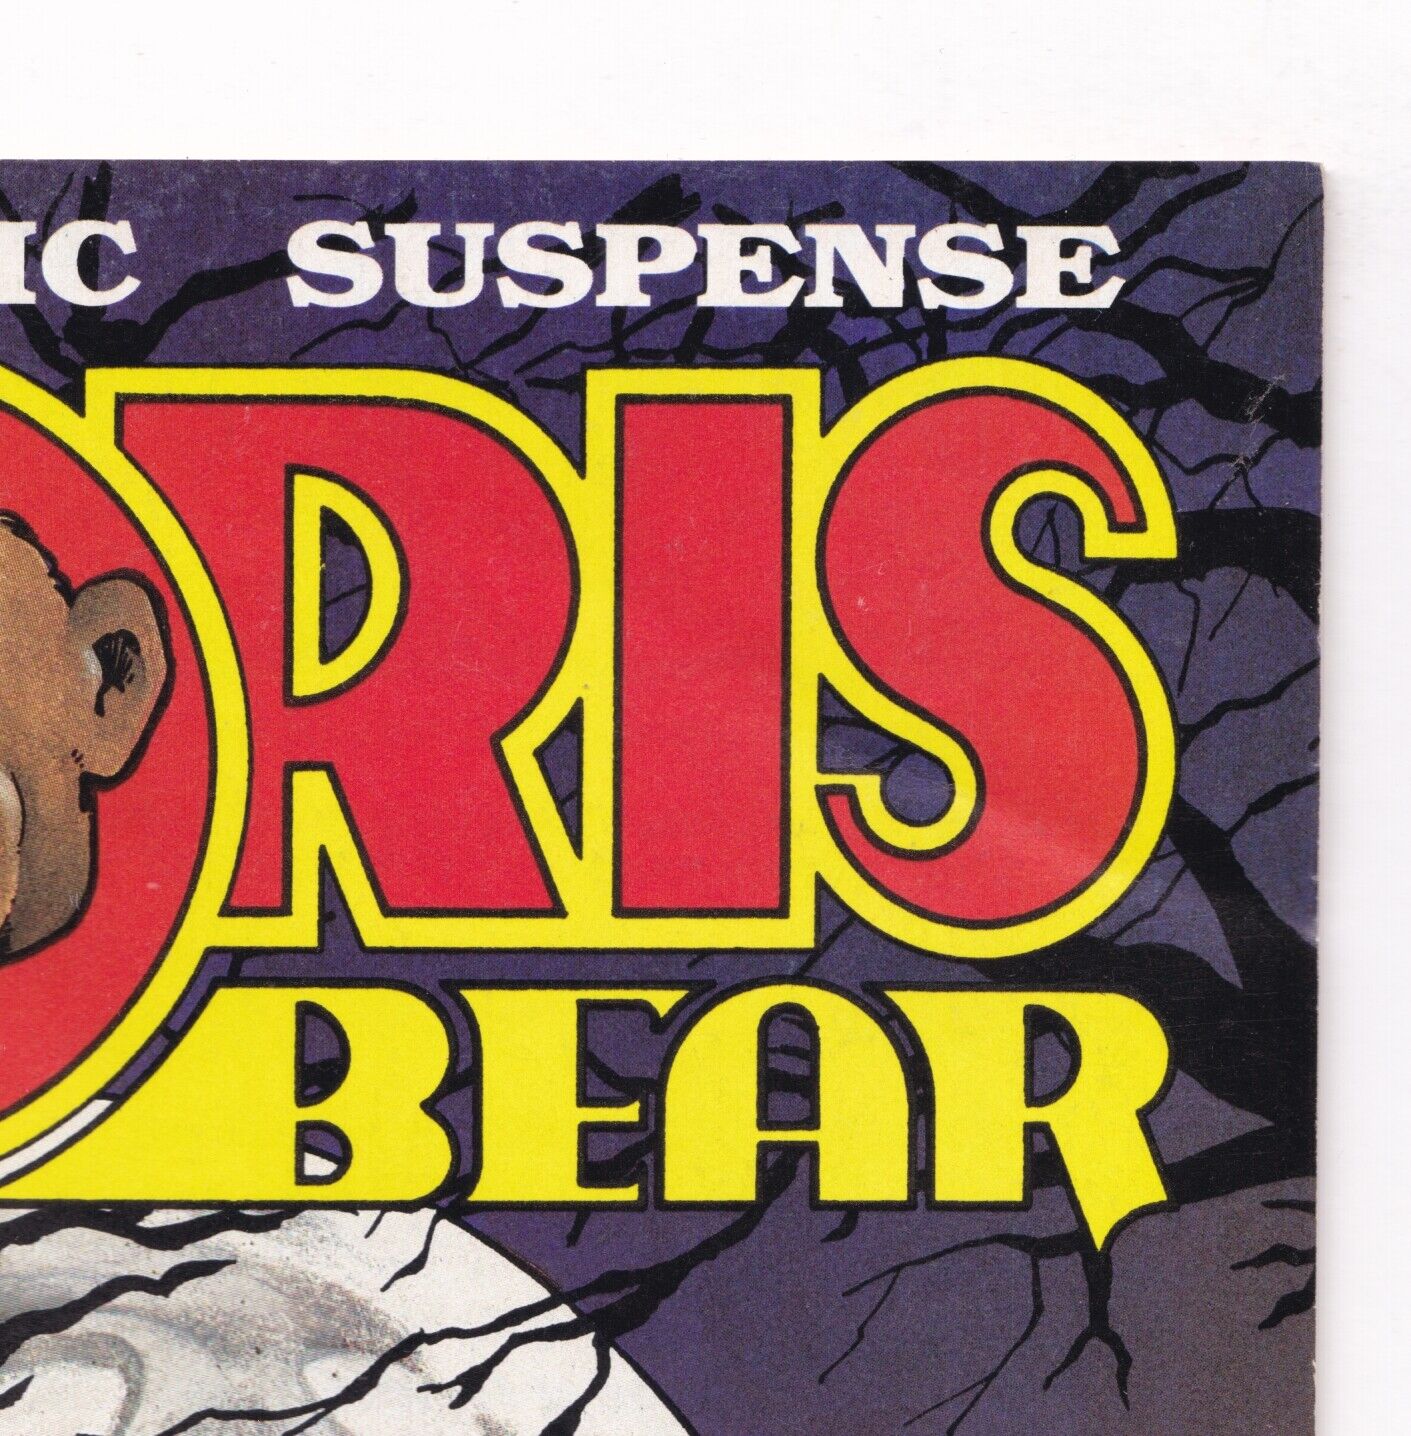 Boris The Bear #5 #10 (1986 Dark Horse) Some cover soiling tanning Без бренда - фотография #7